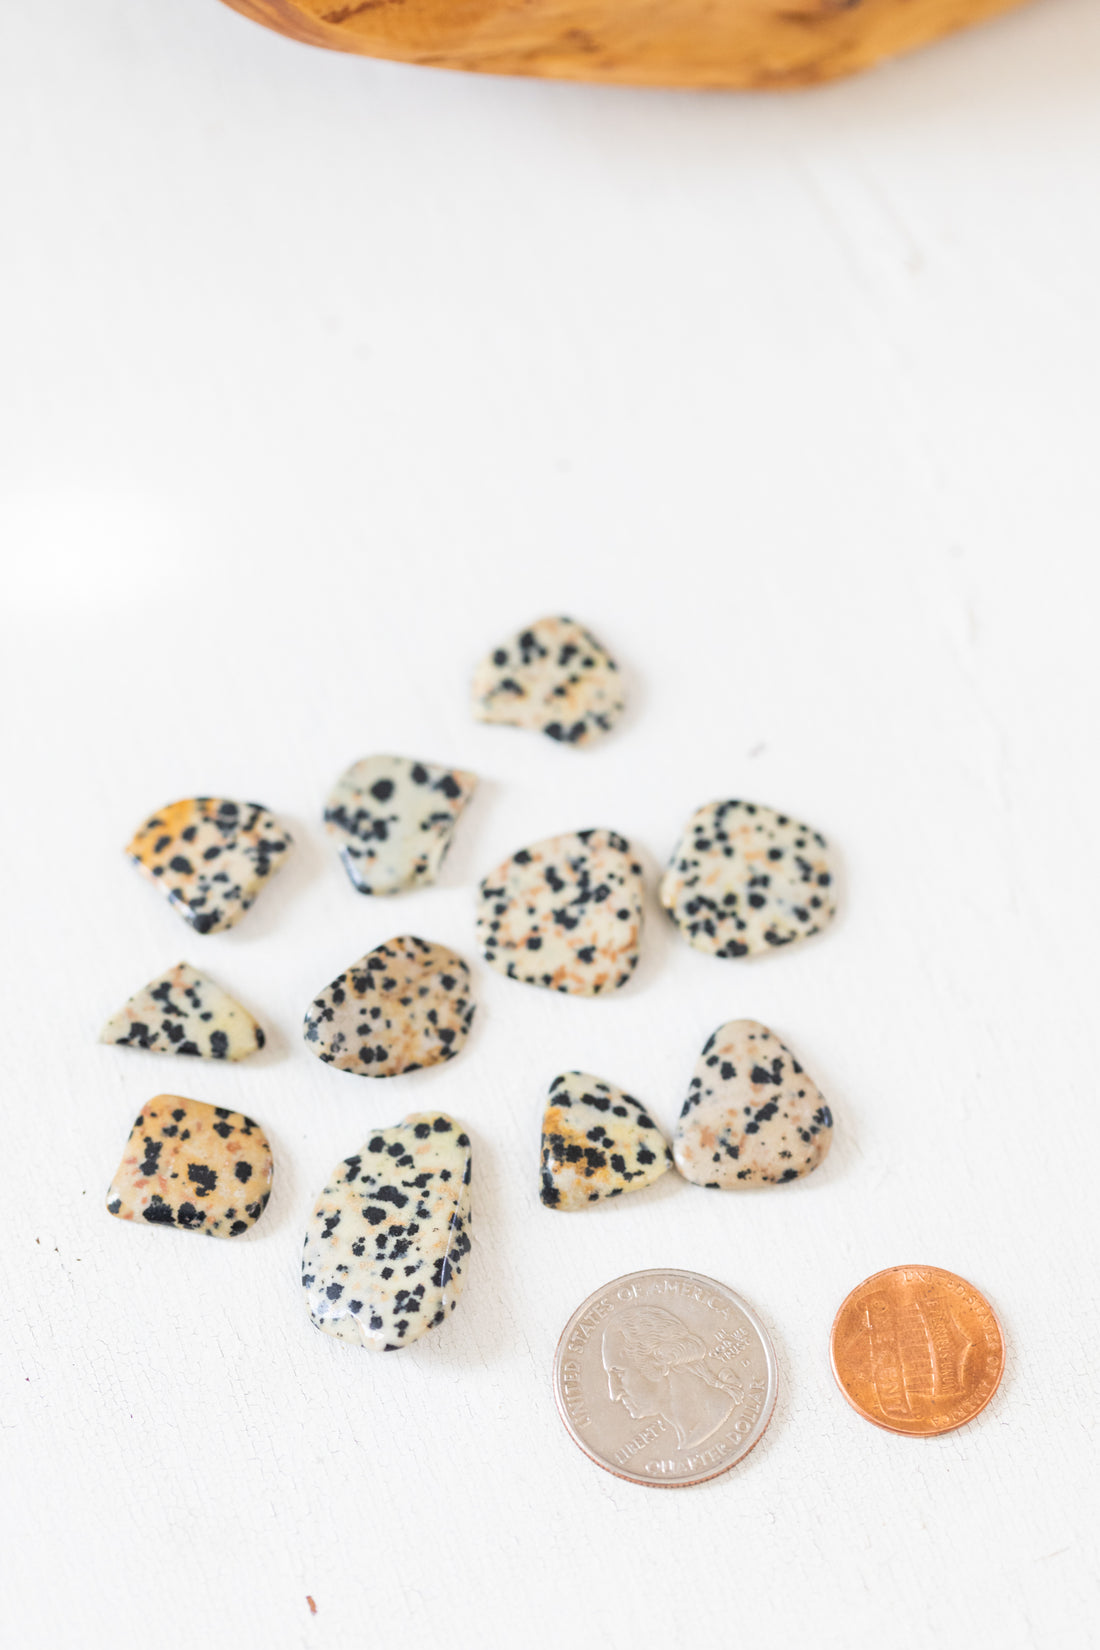 Dalmatian Stone - Tumbled